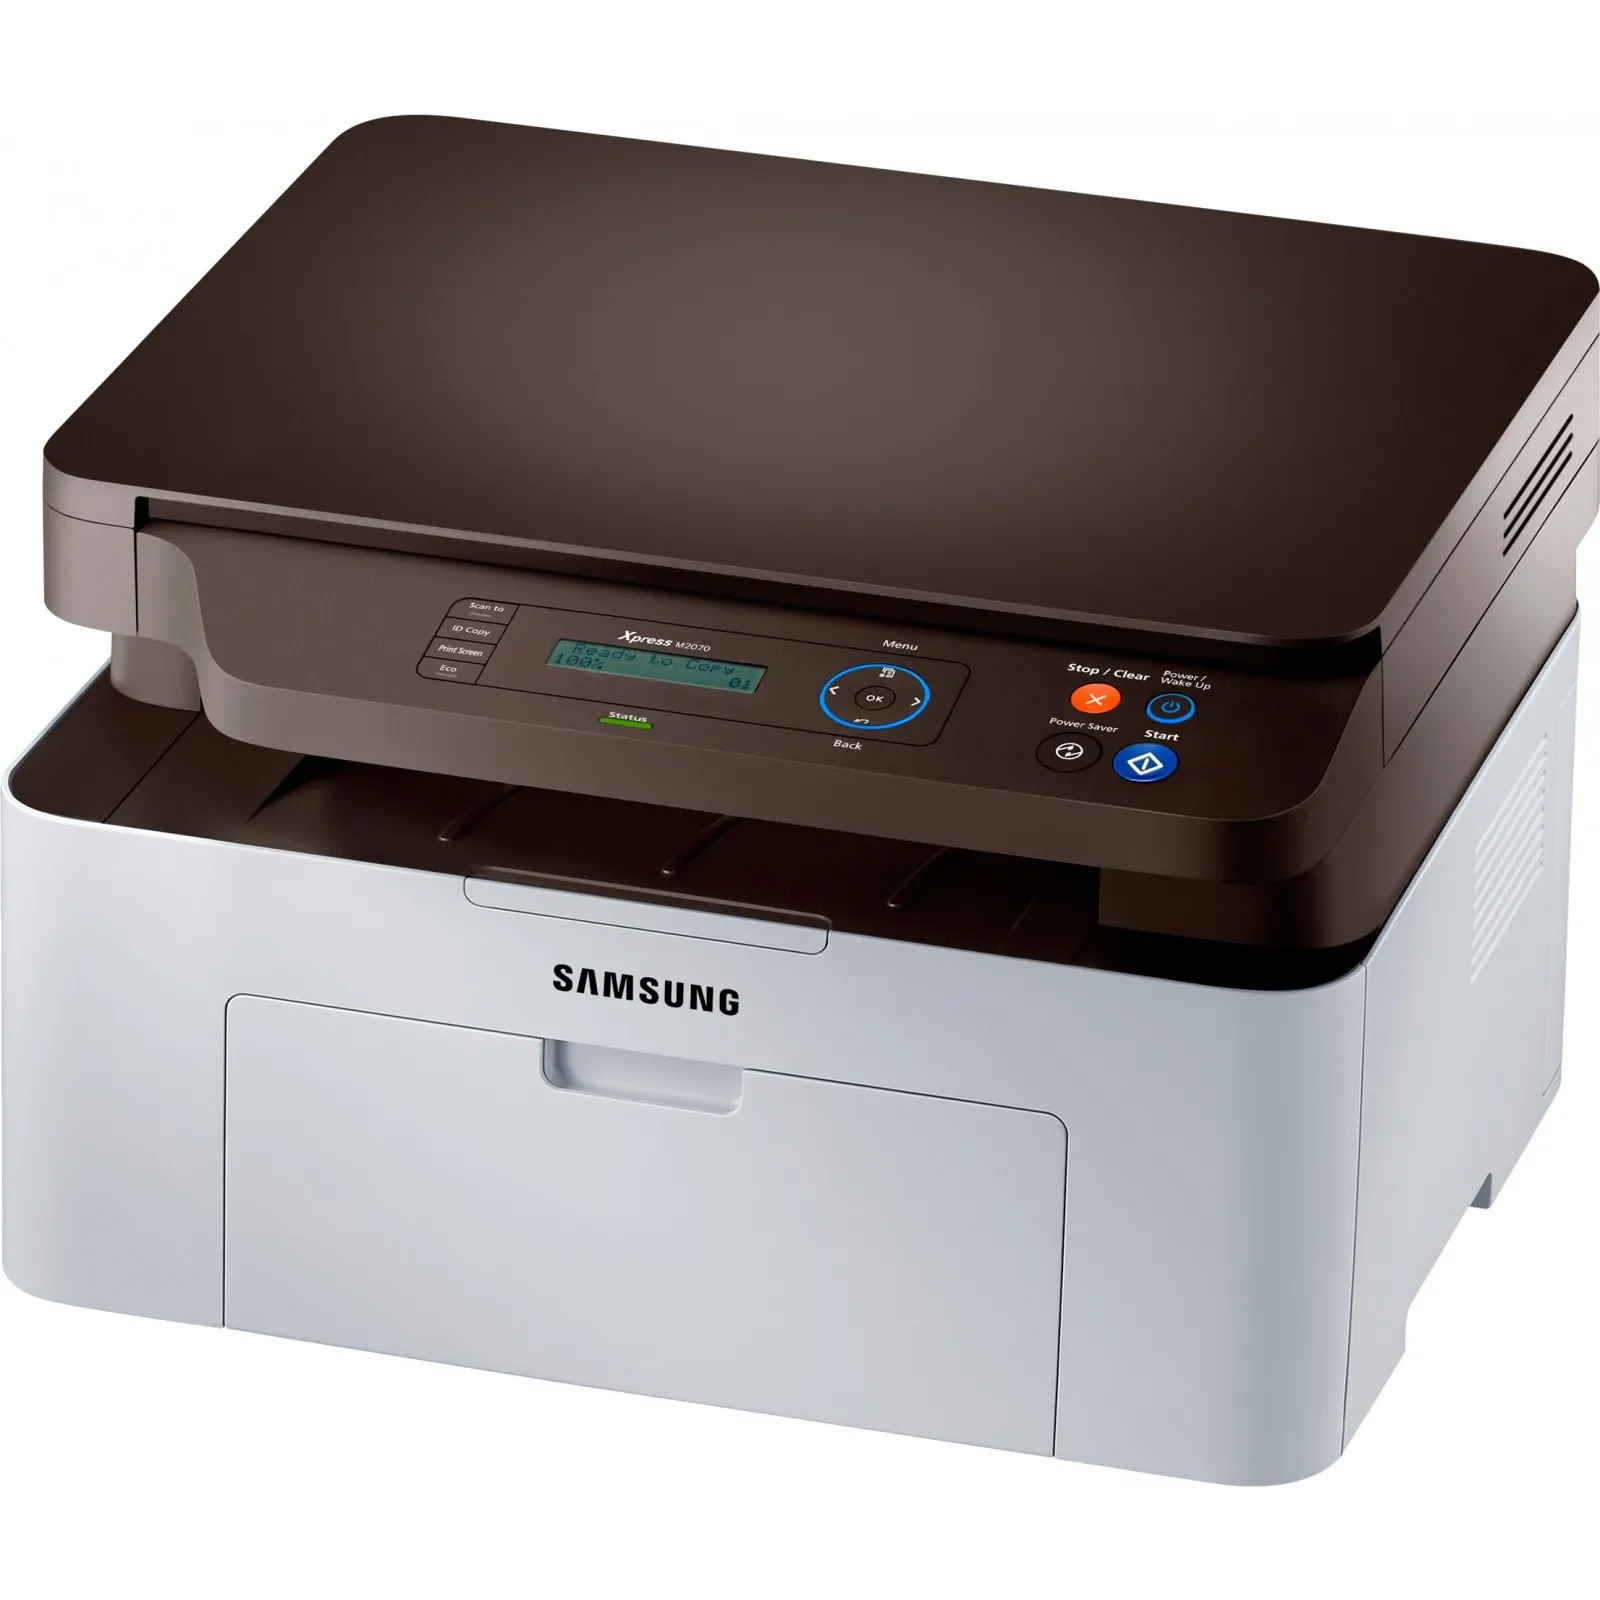 МФУ Samsung SL-M2070 (A4, 20 стр / мин, 128Mb, лазерное МФУ, USB 2.0)#3